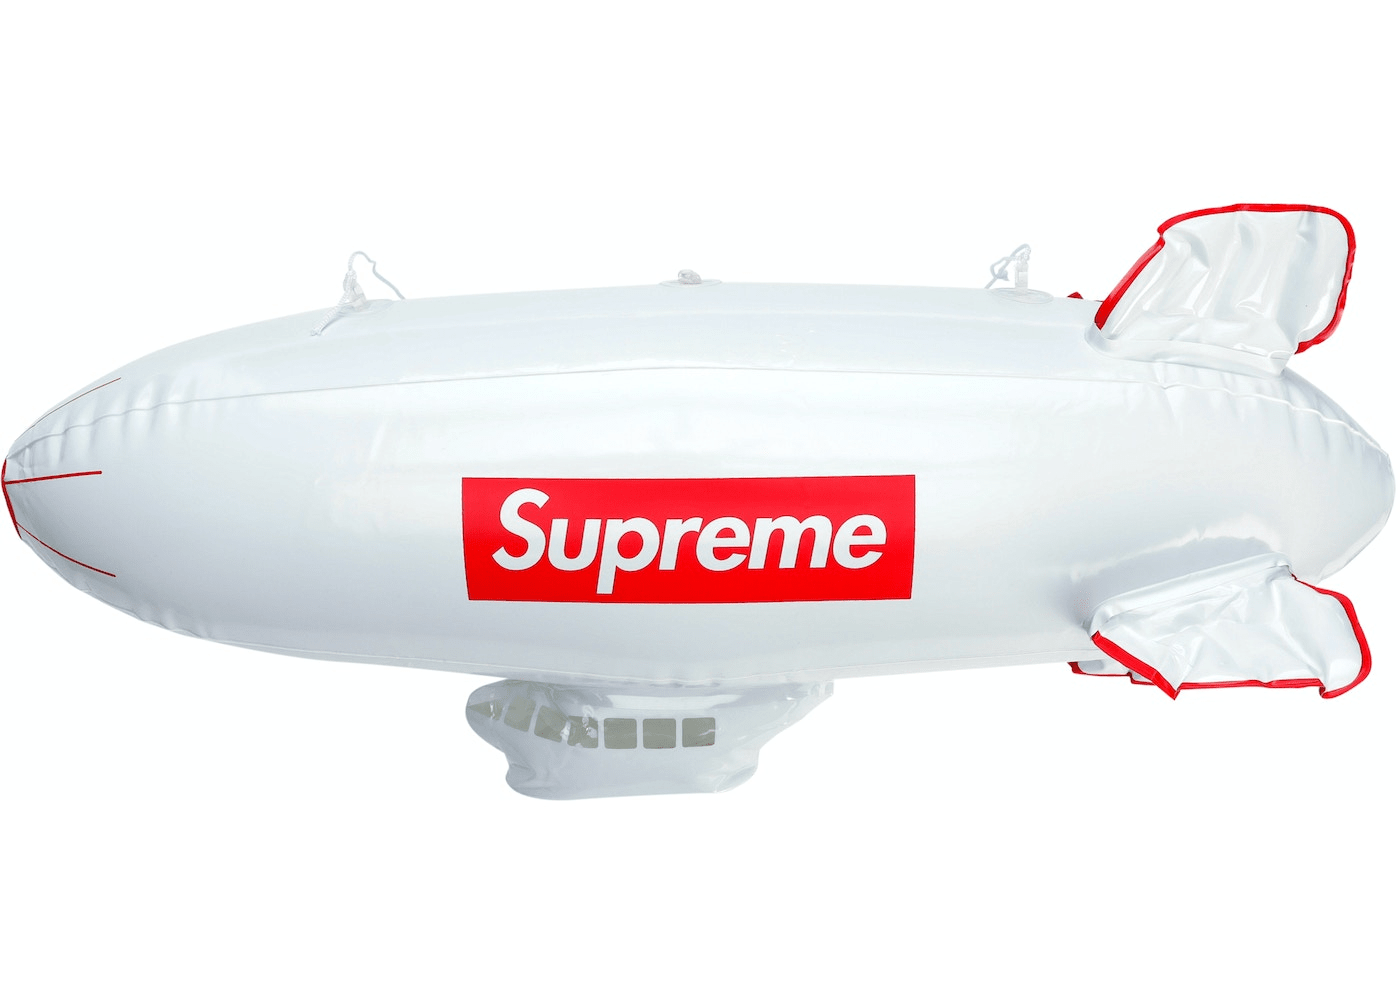 Supreme Inflatable Blimp White | Kenshi Toronto